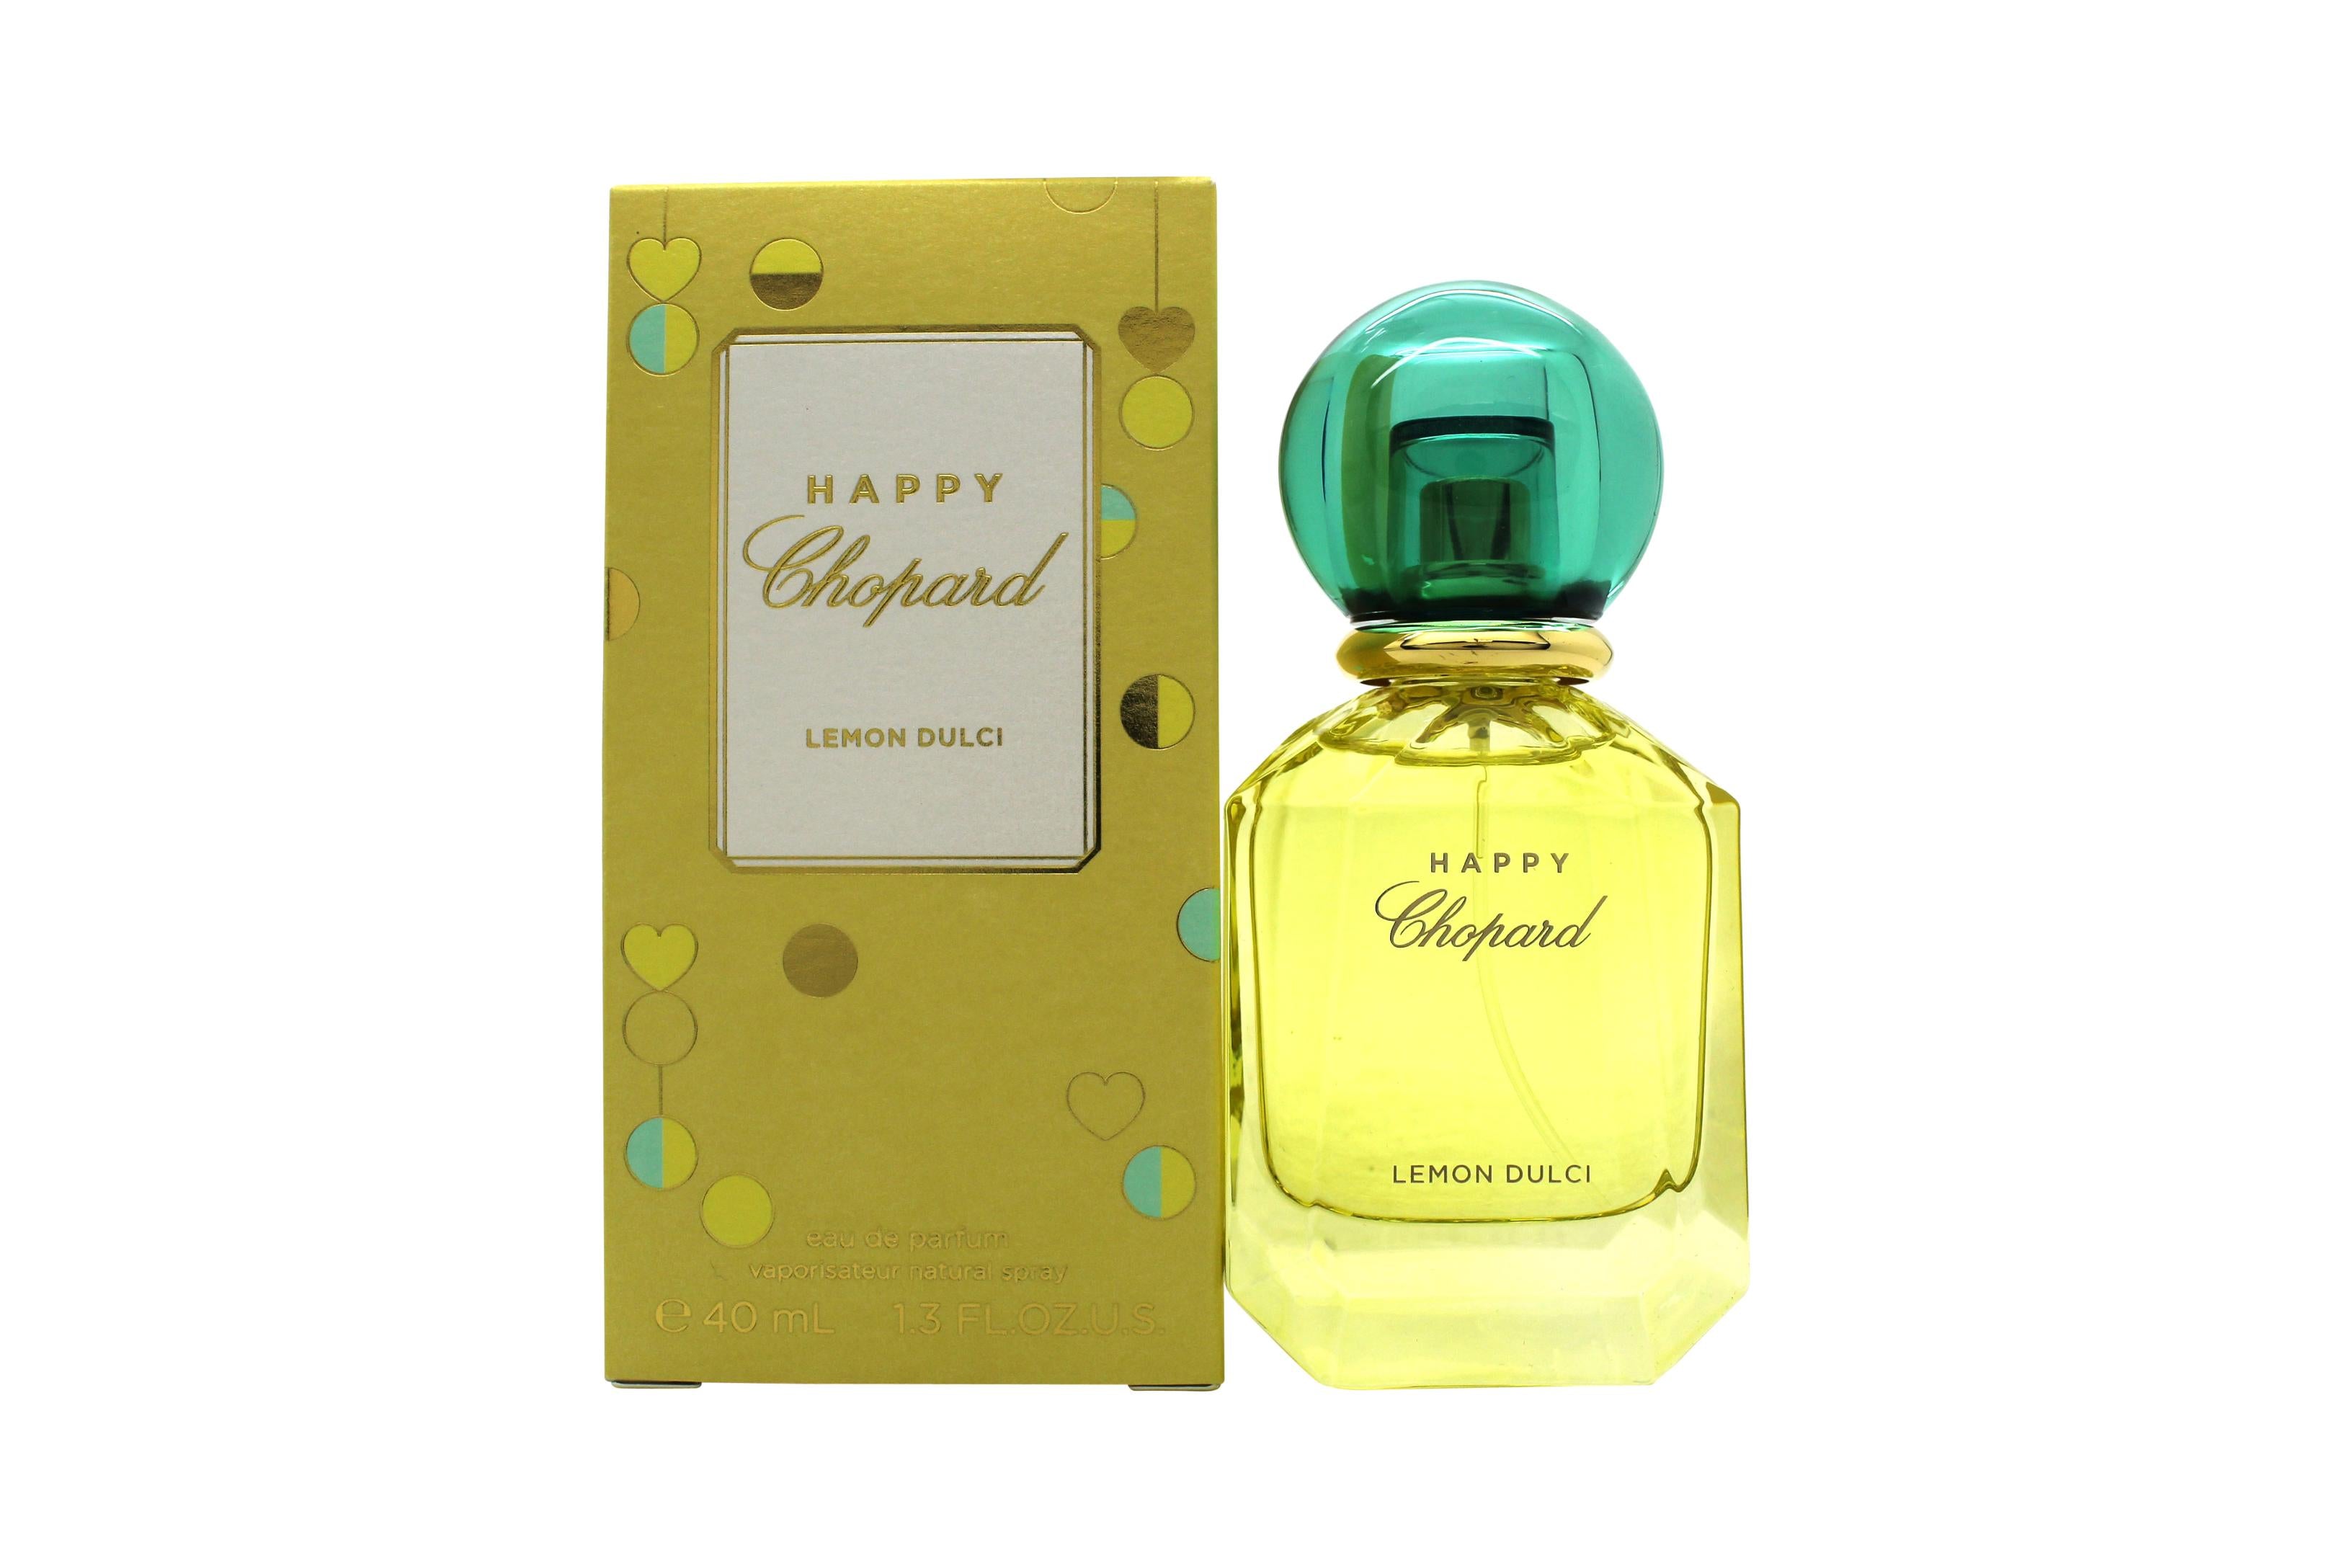 View Chopard Happy Lemon Dulci Eau de Parfum 40ml Spray information